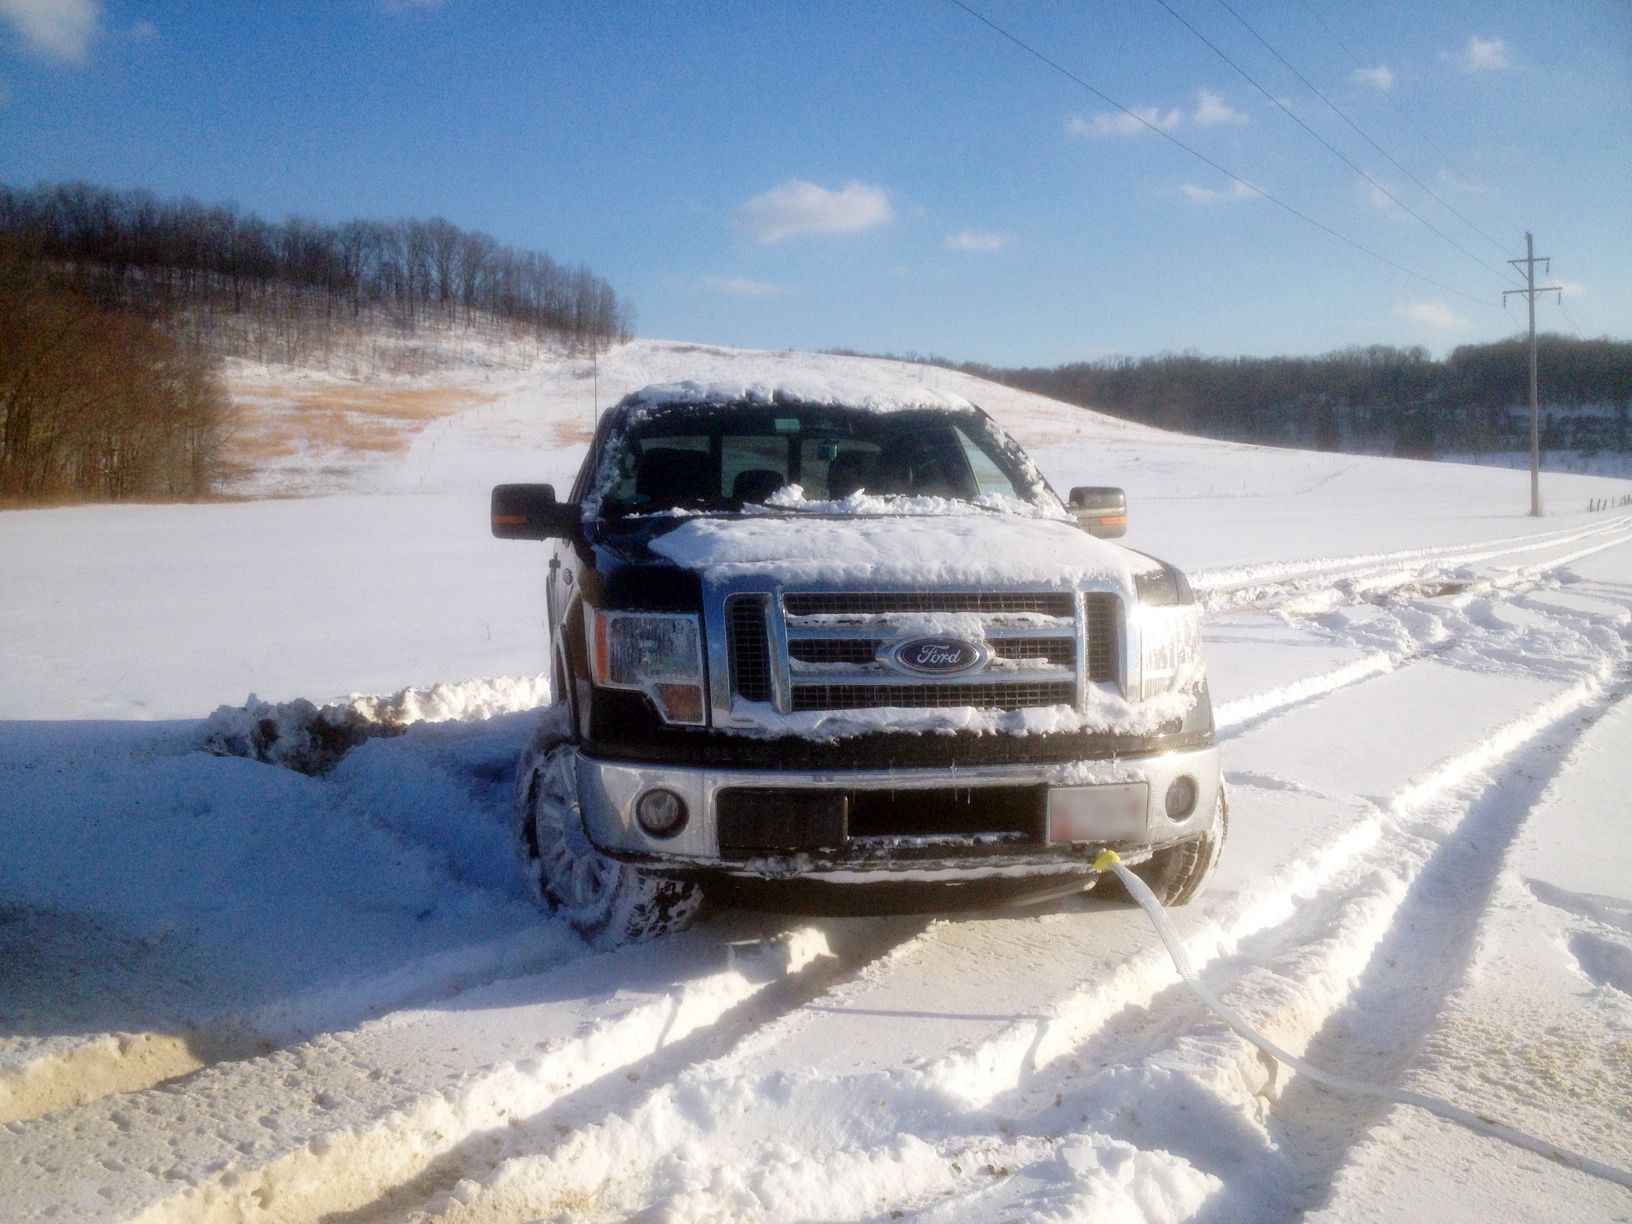 Black Ford F-150 stuck in heavy snowy 